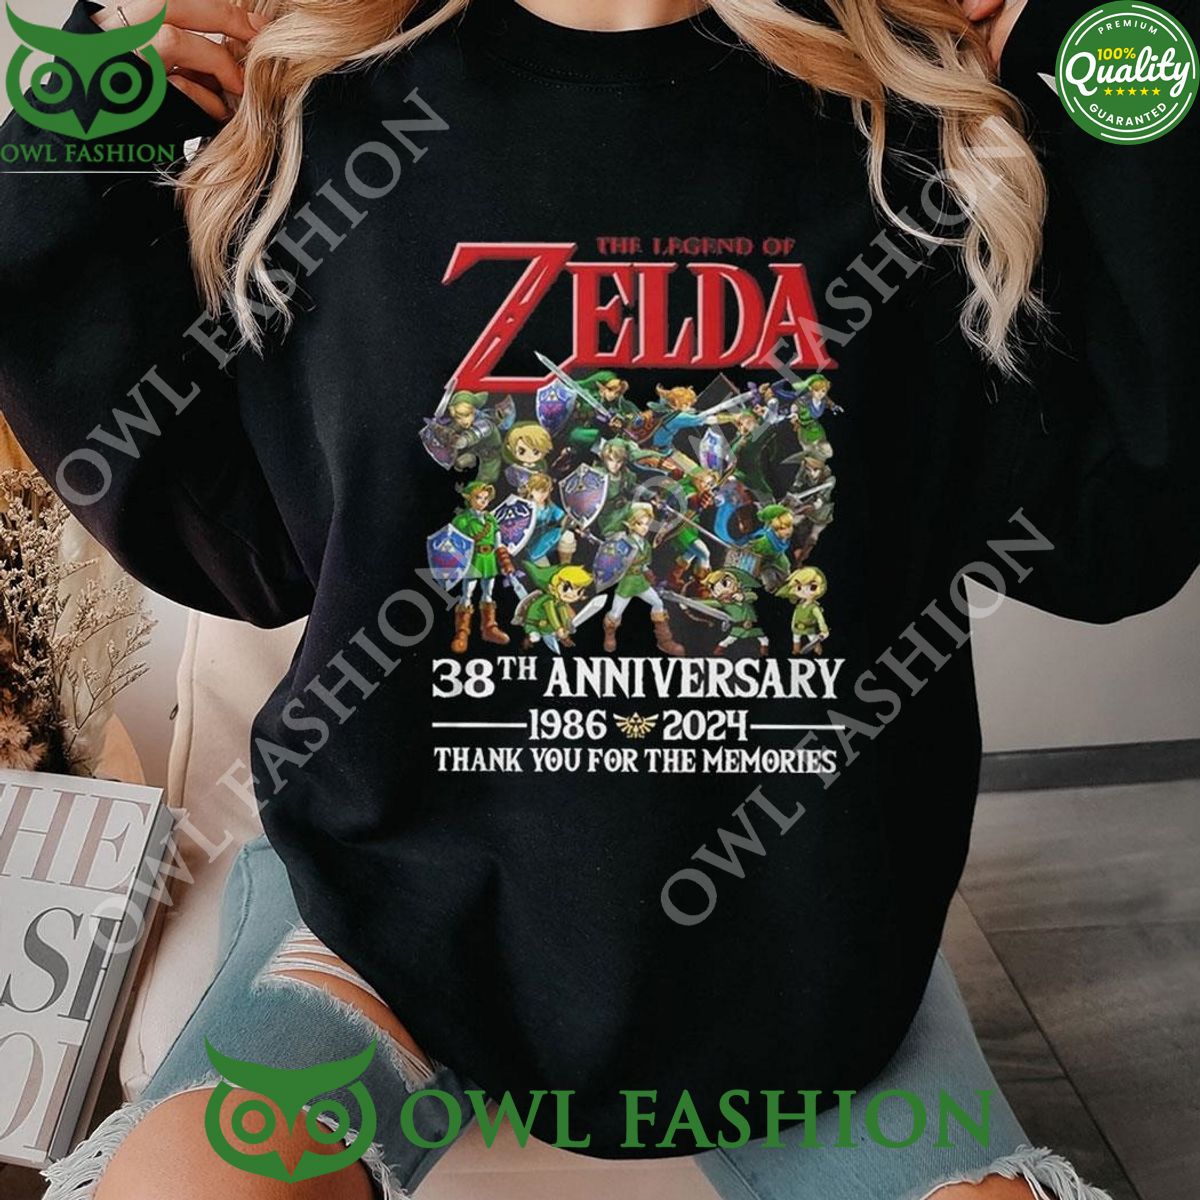 the legends of zelda 38th anniversary 1986 2024 memories hoodie shirt 1 fyUaC.jpg